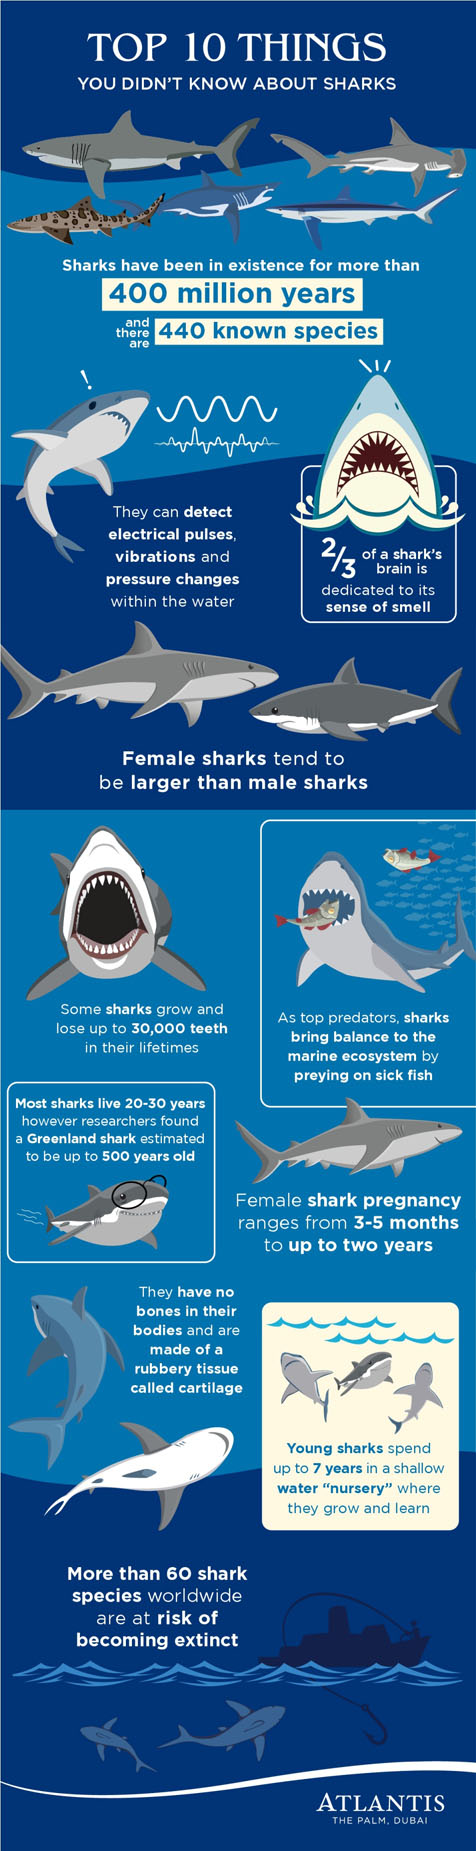 Atlantis-The-Palm-Shark-Week-Infographic-English.jpg